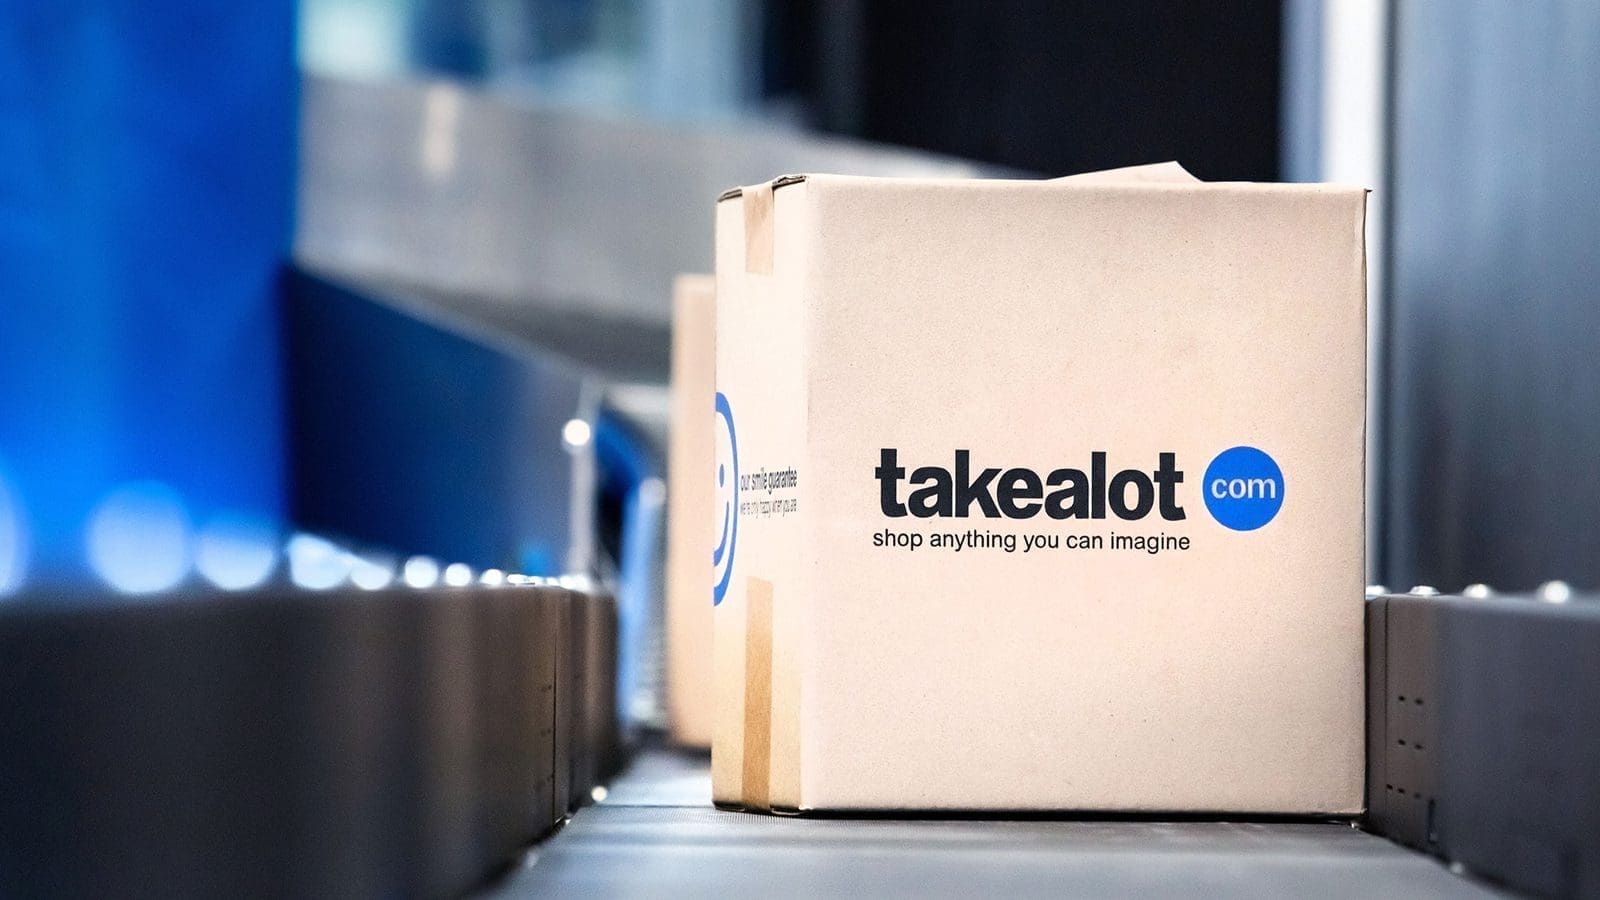 SA online retailer Takealot to open massive new distribution centre in Cape Town in 2022